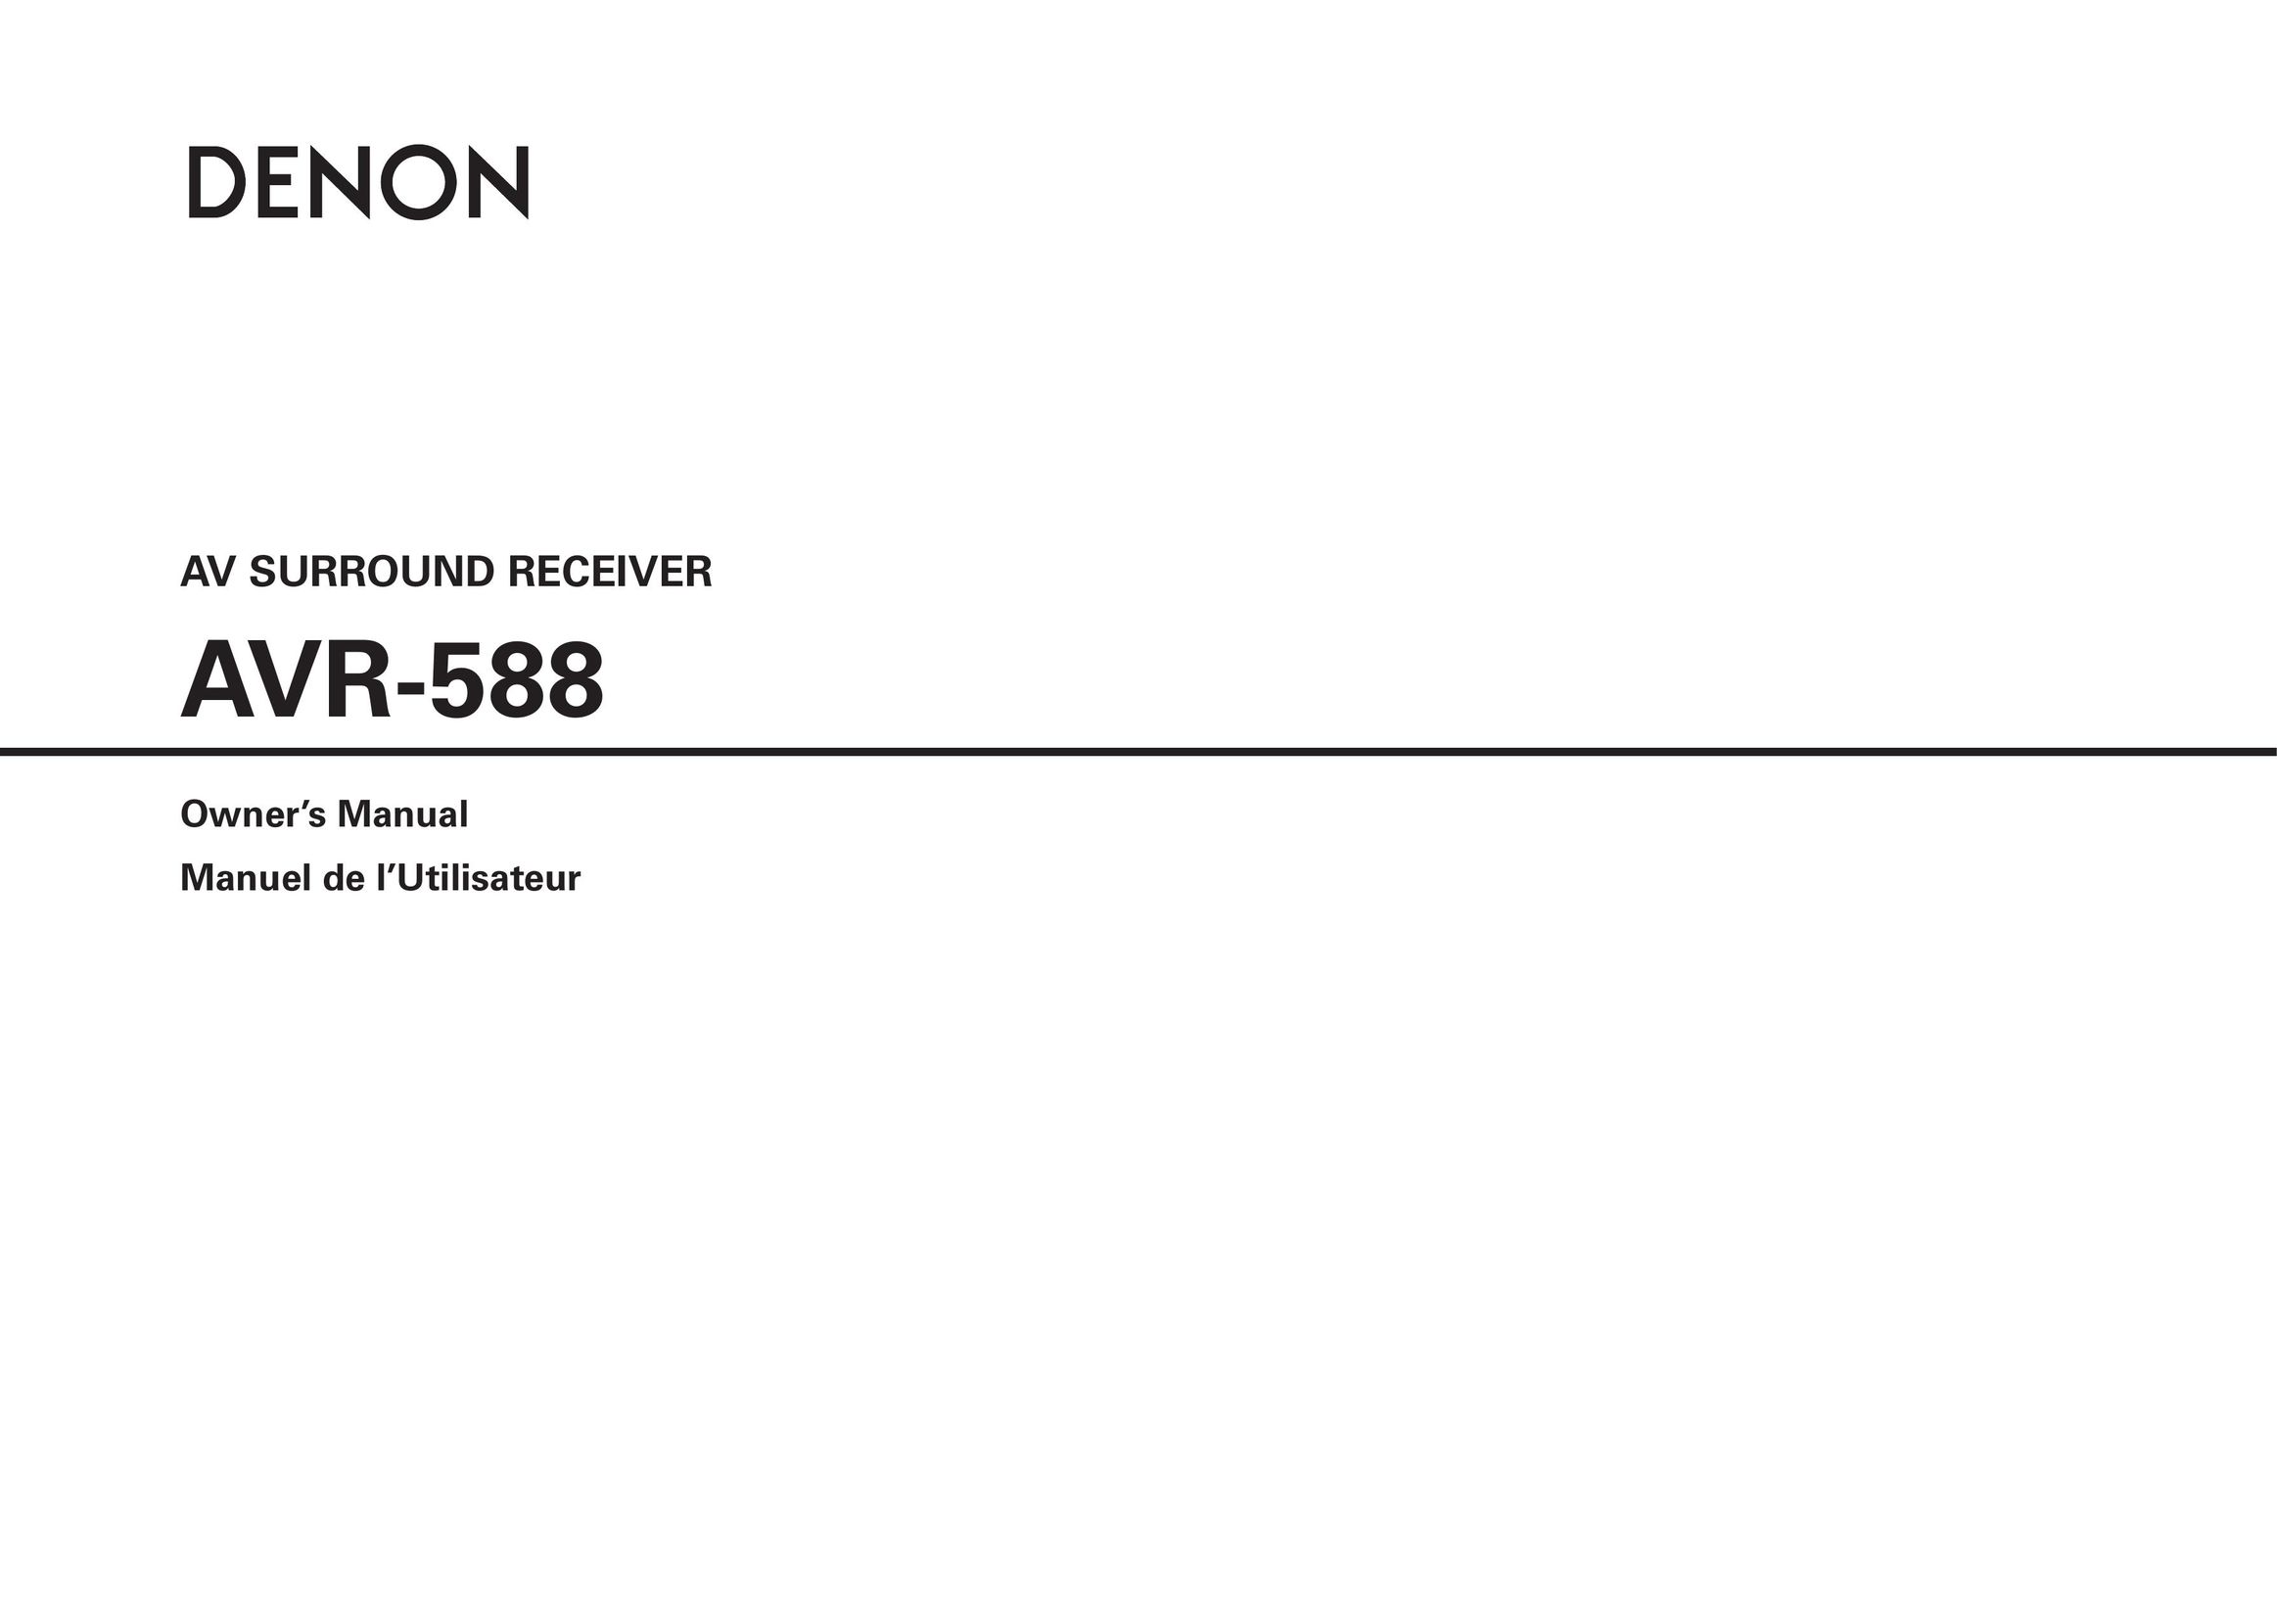 Denon AVR-588 Stereo Receiver User Manual